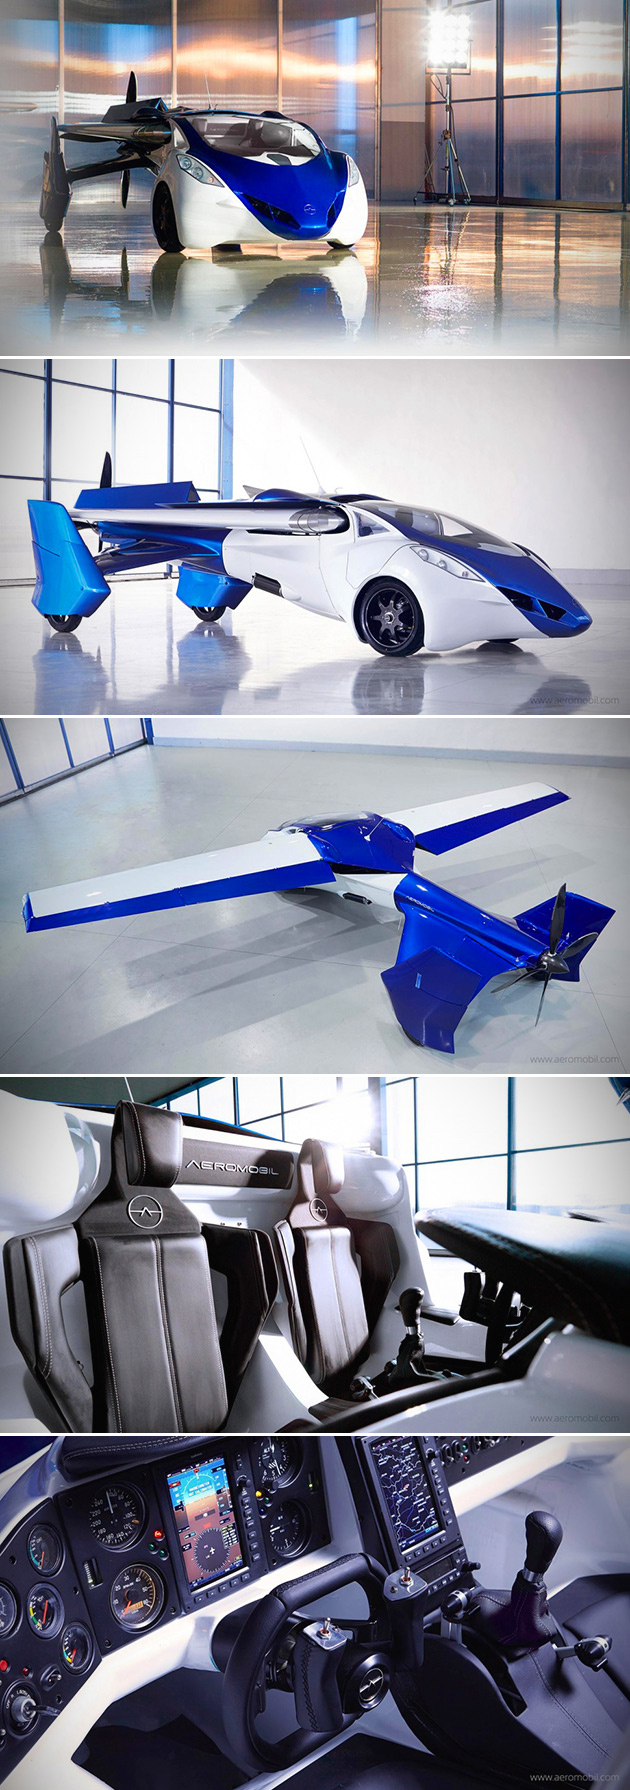 AeroMobil Flying Car 2015 2016